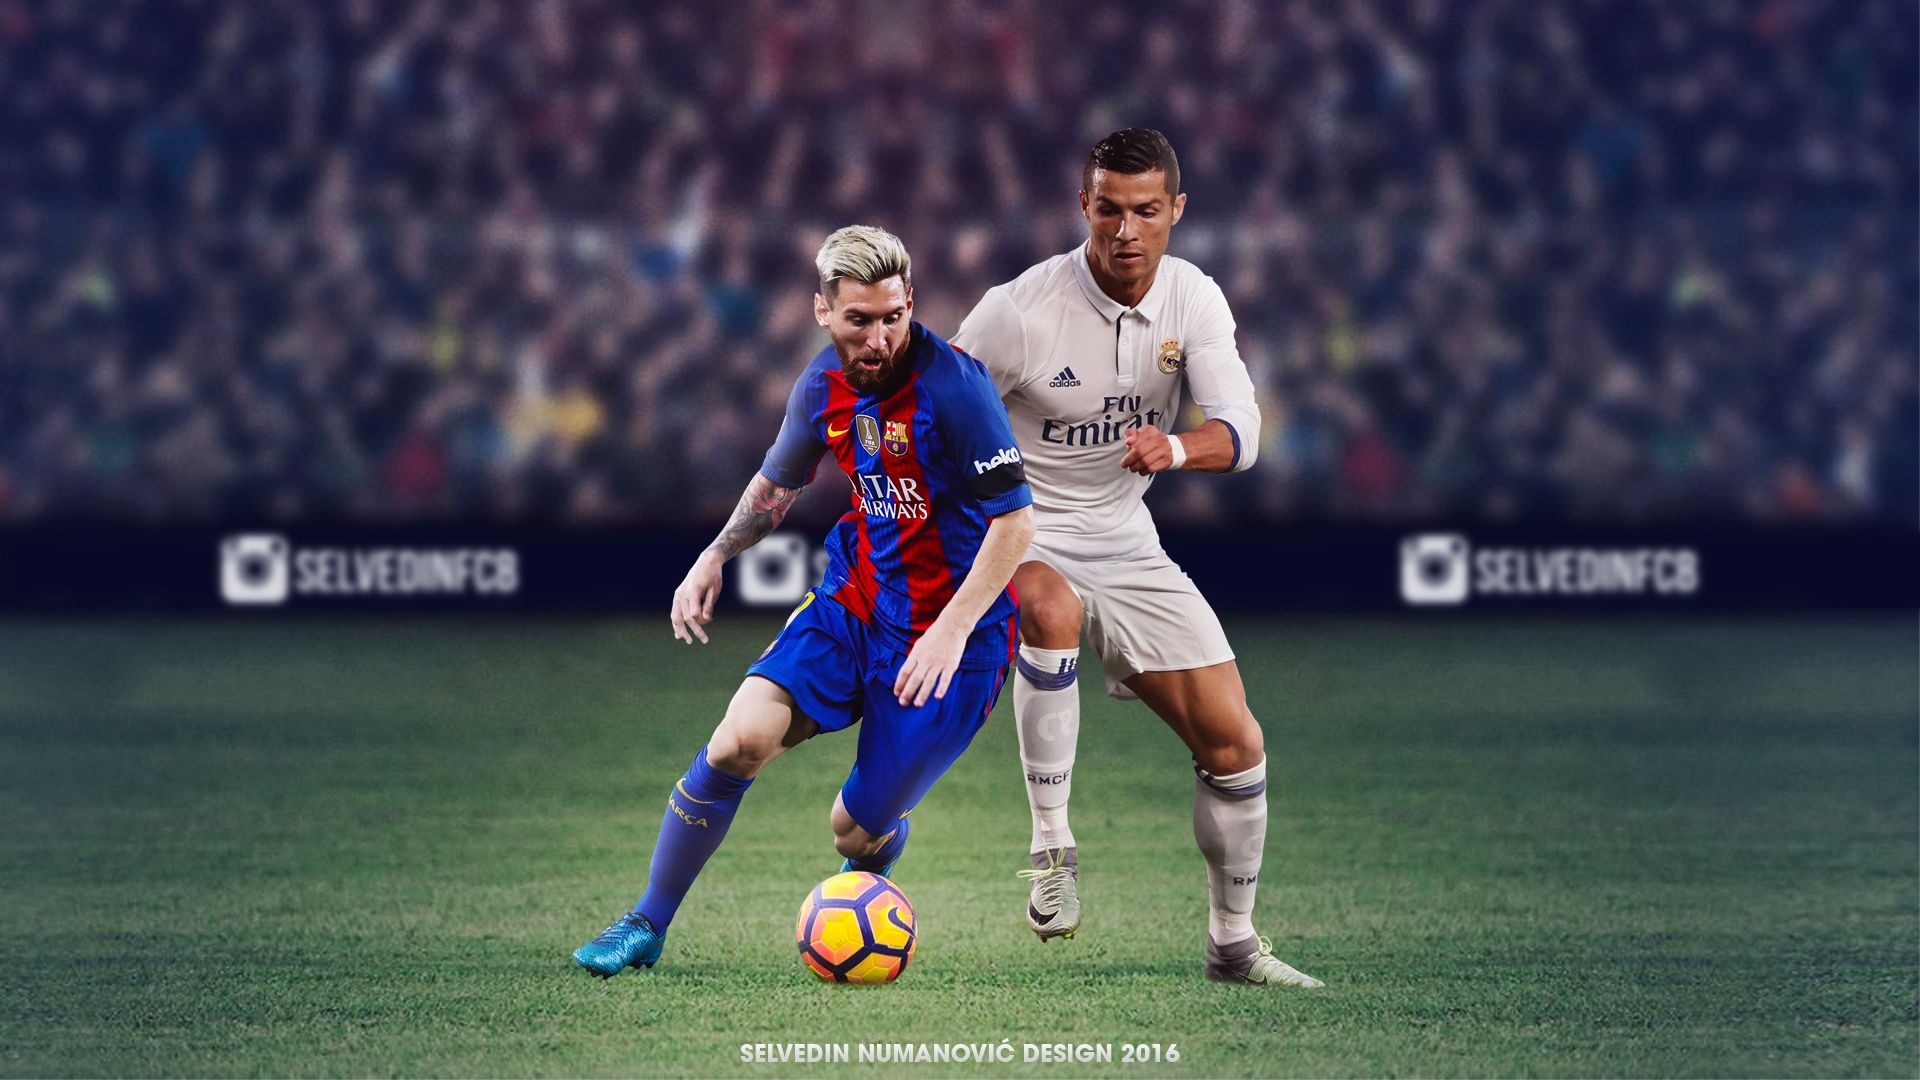 Messi and Ronaldo Wallpaper